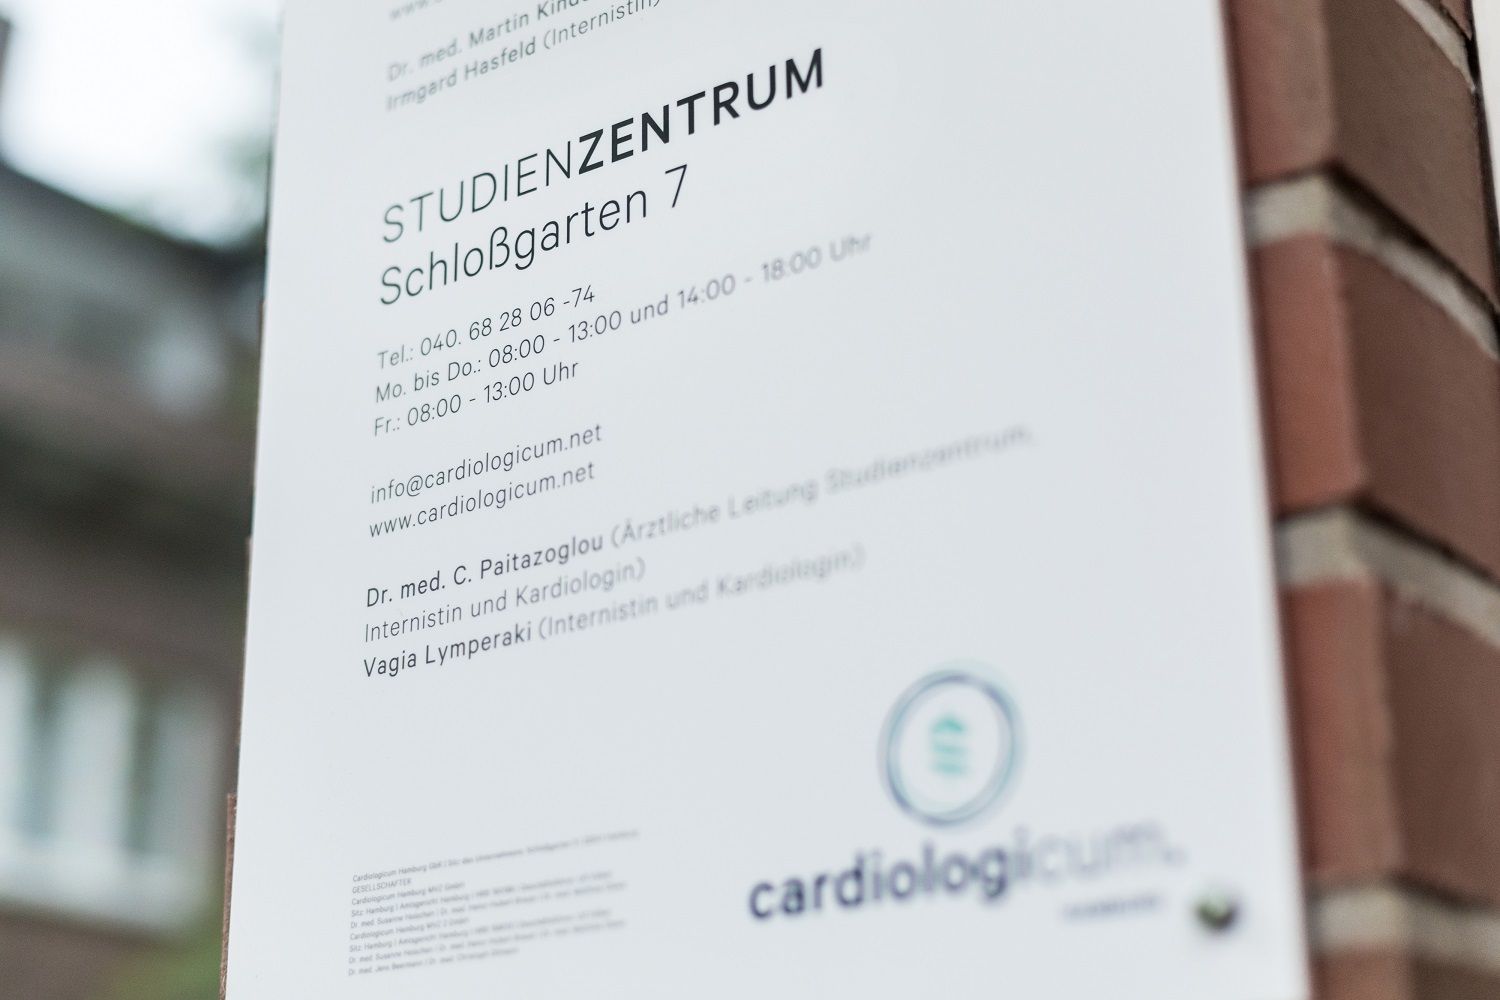 Cardiologicum Hamburg StudienzentrumStudienzentrum